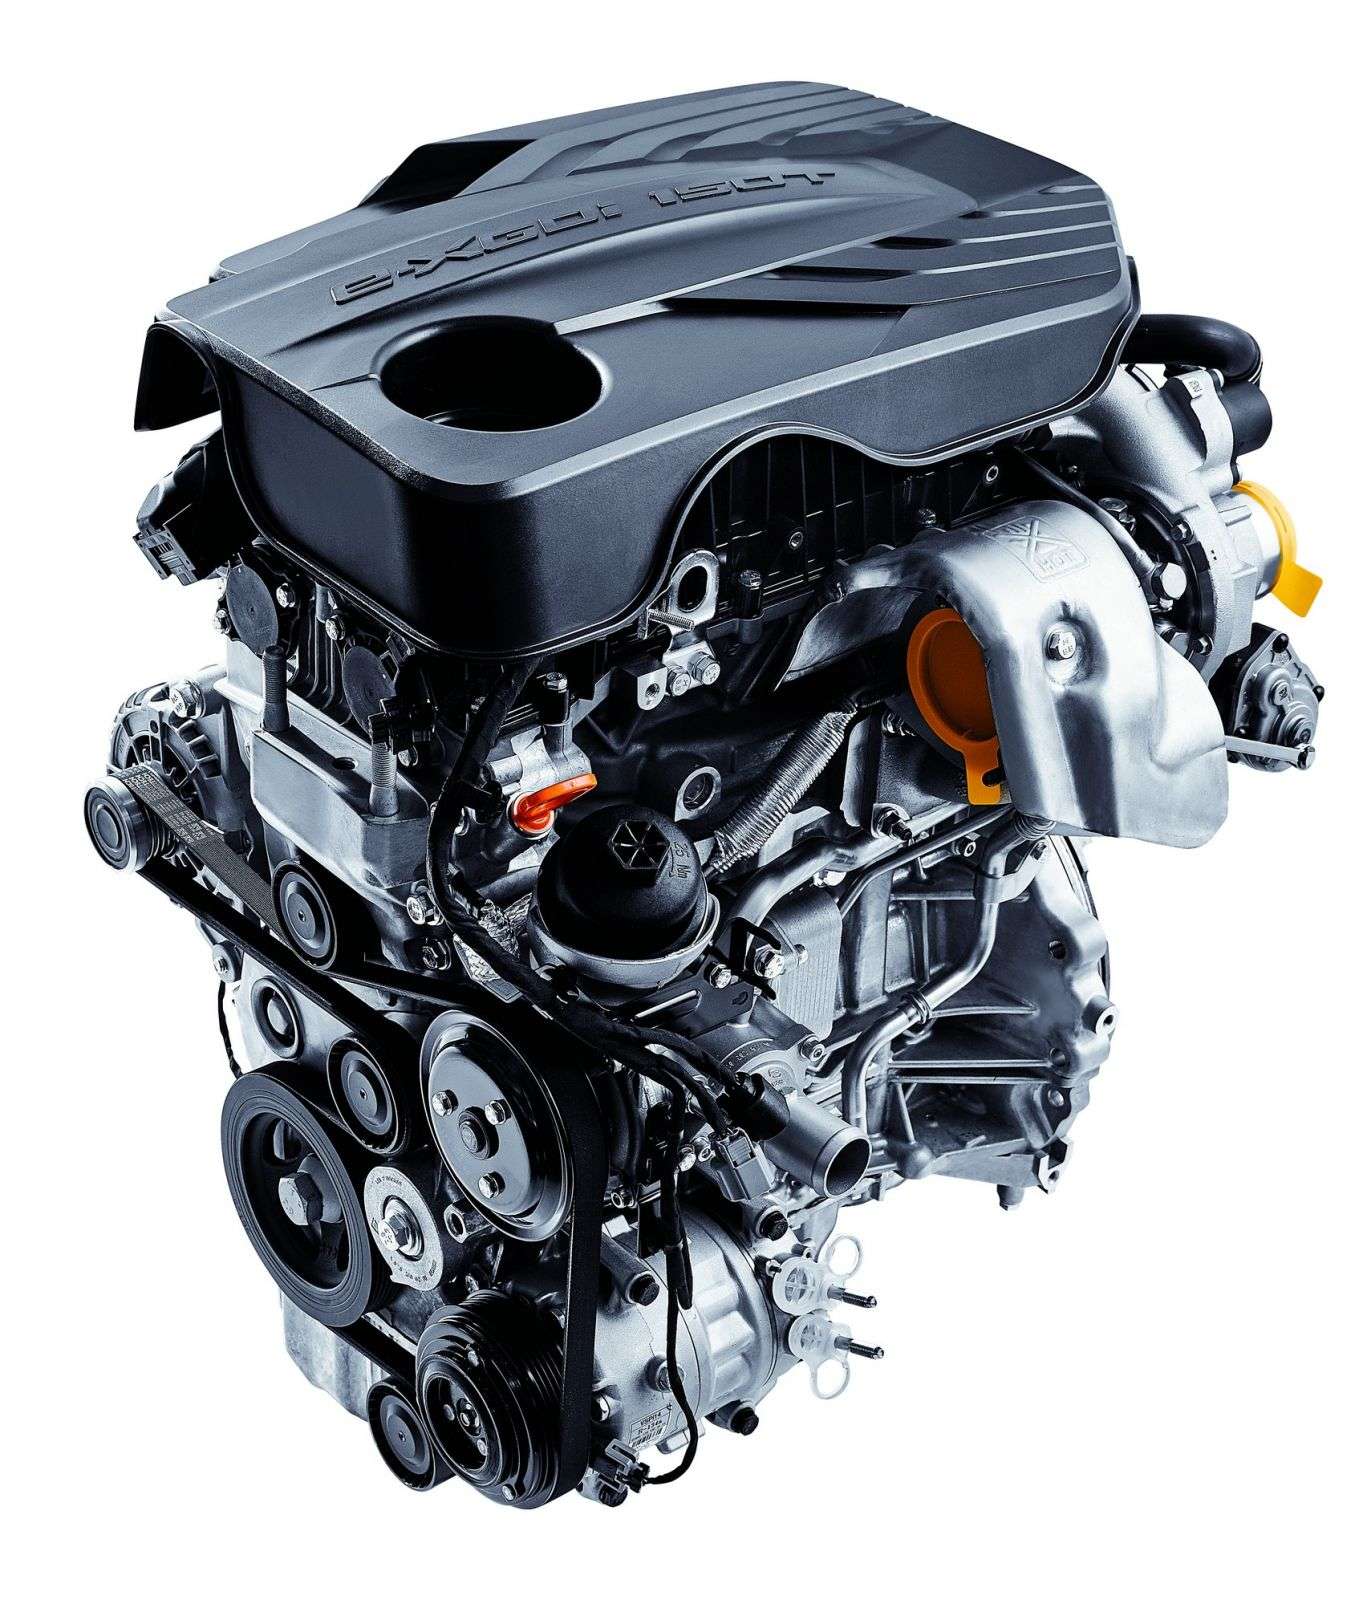 1.5 GDI-Turbo motor